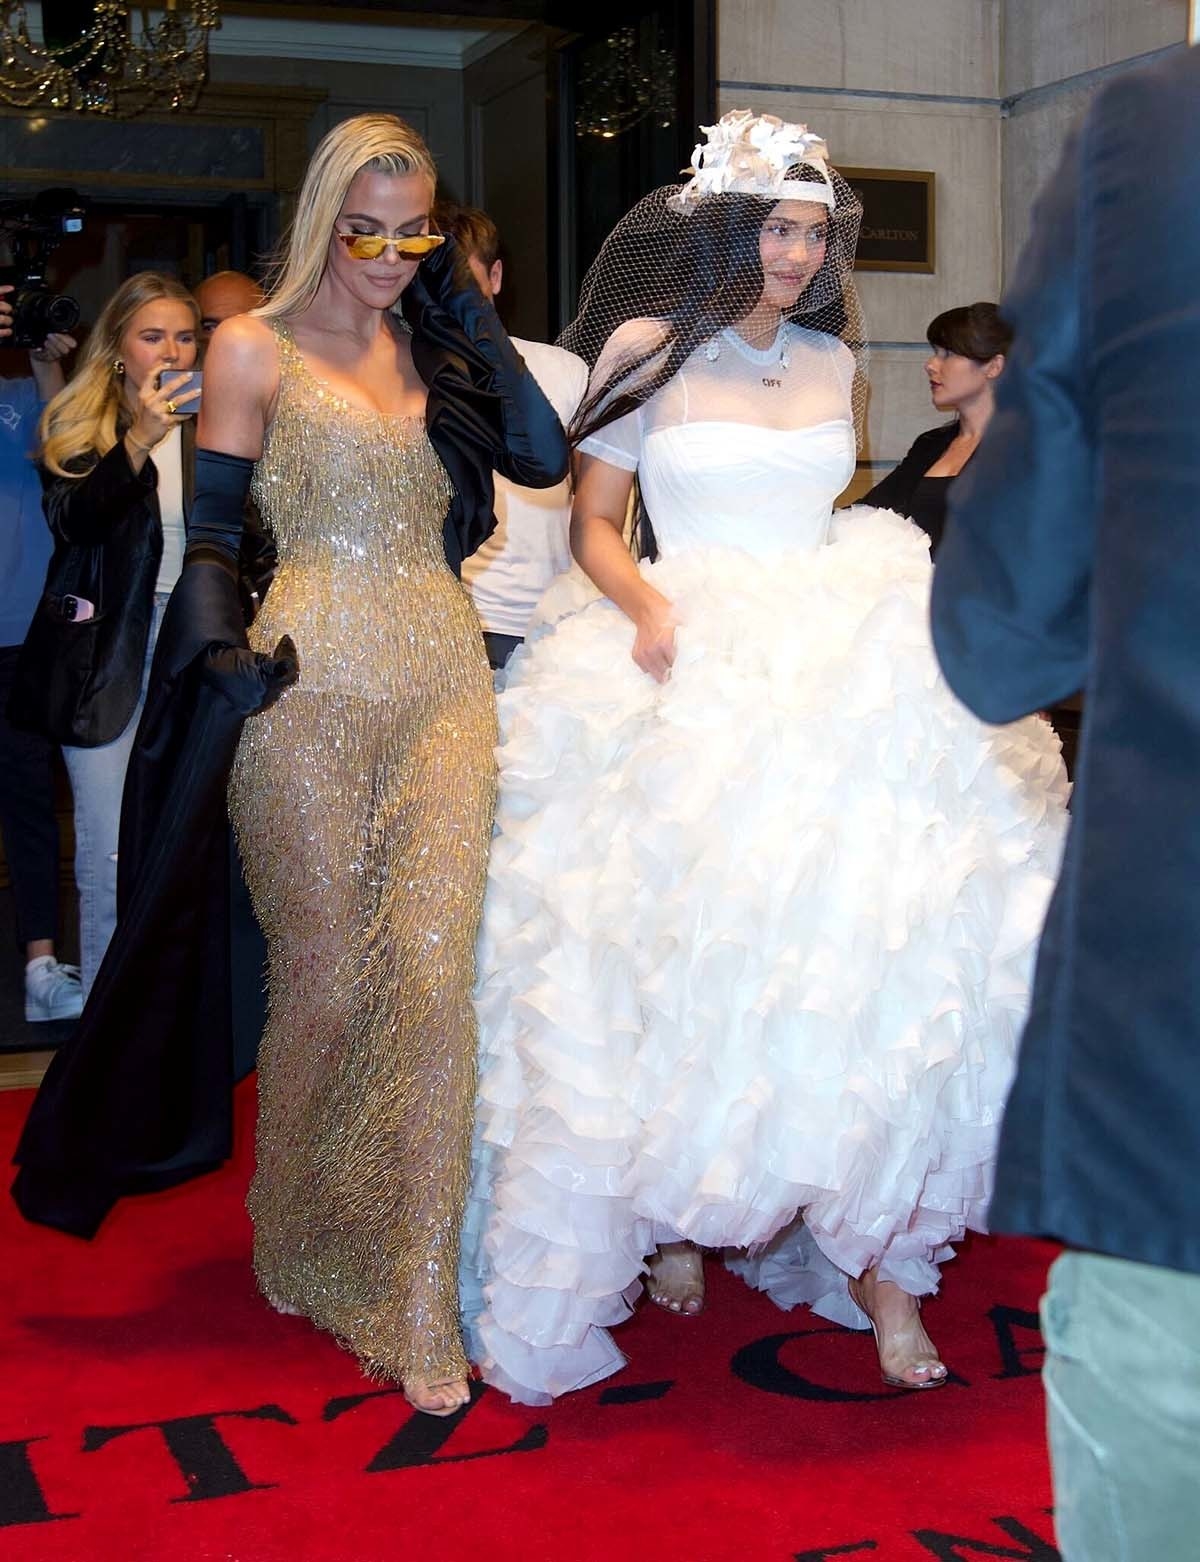 Kylie Jenner and Khloe Kardashian 2022